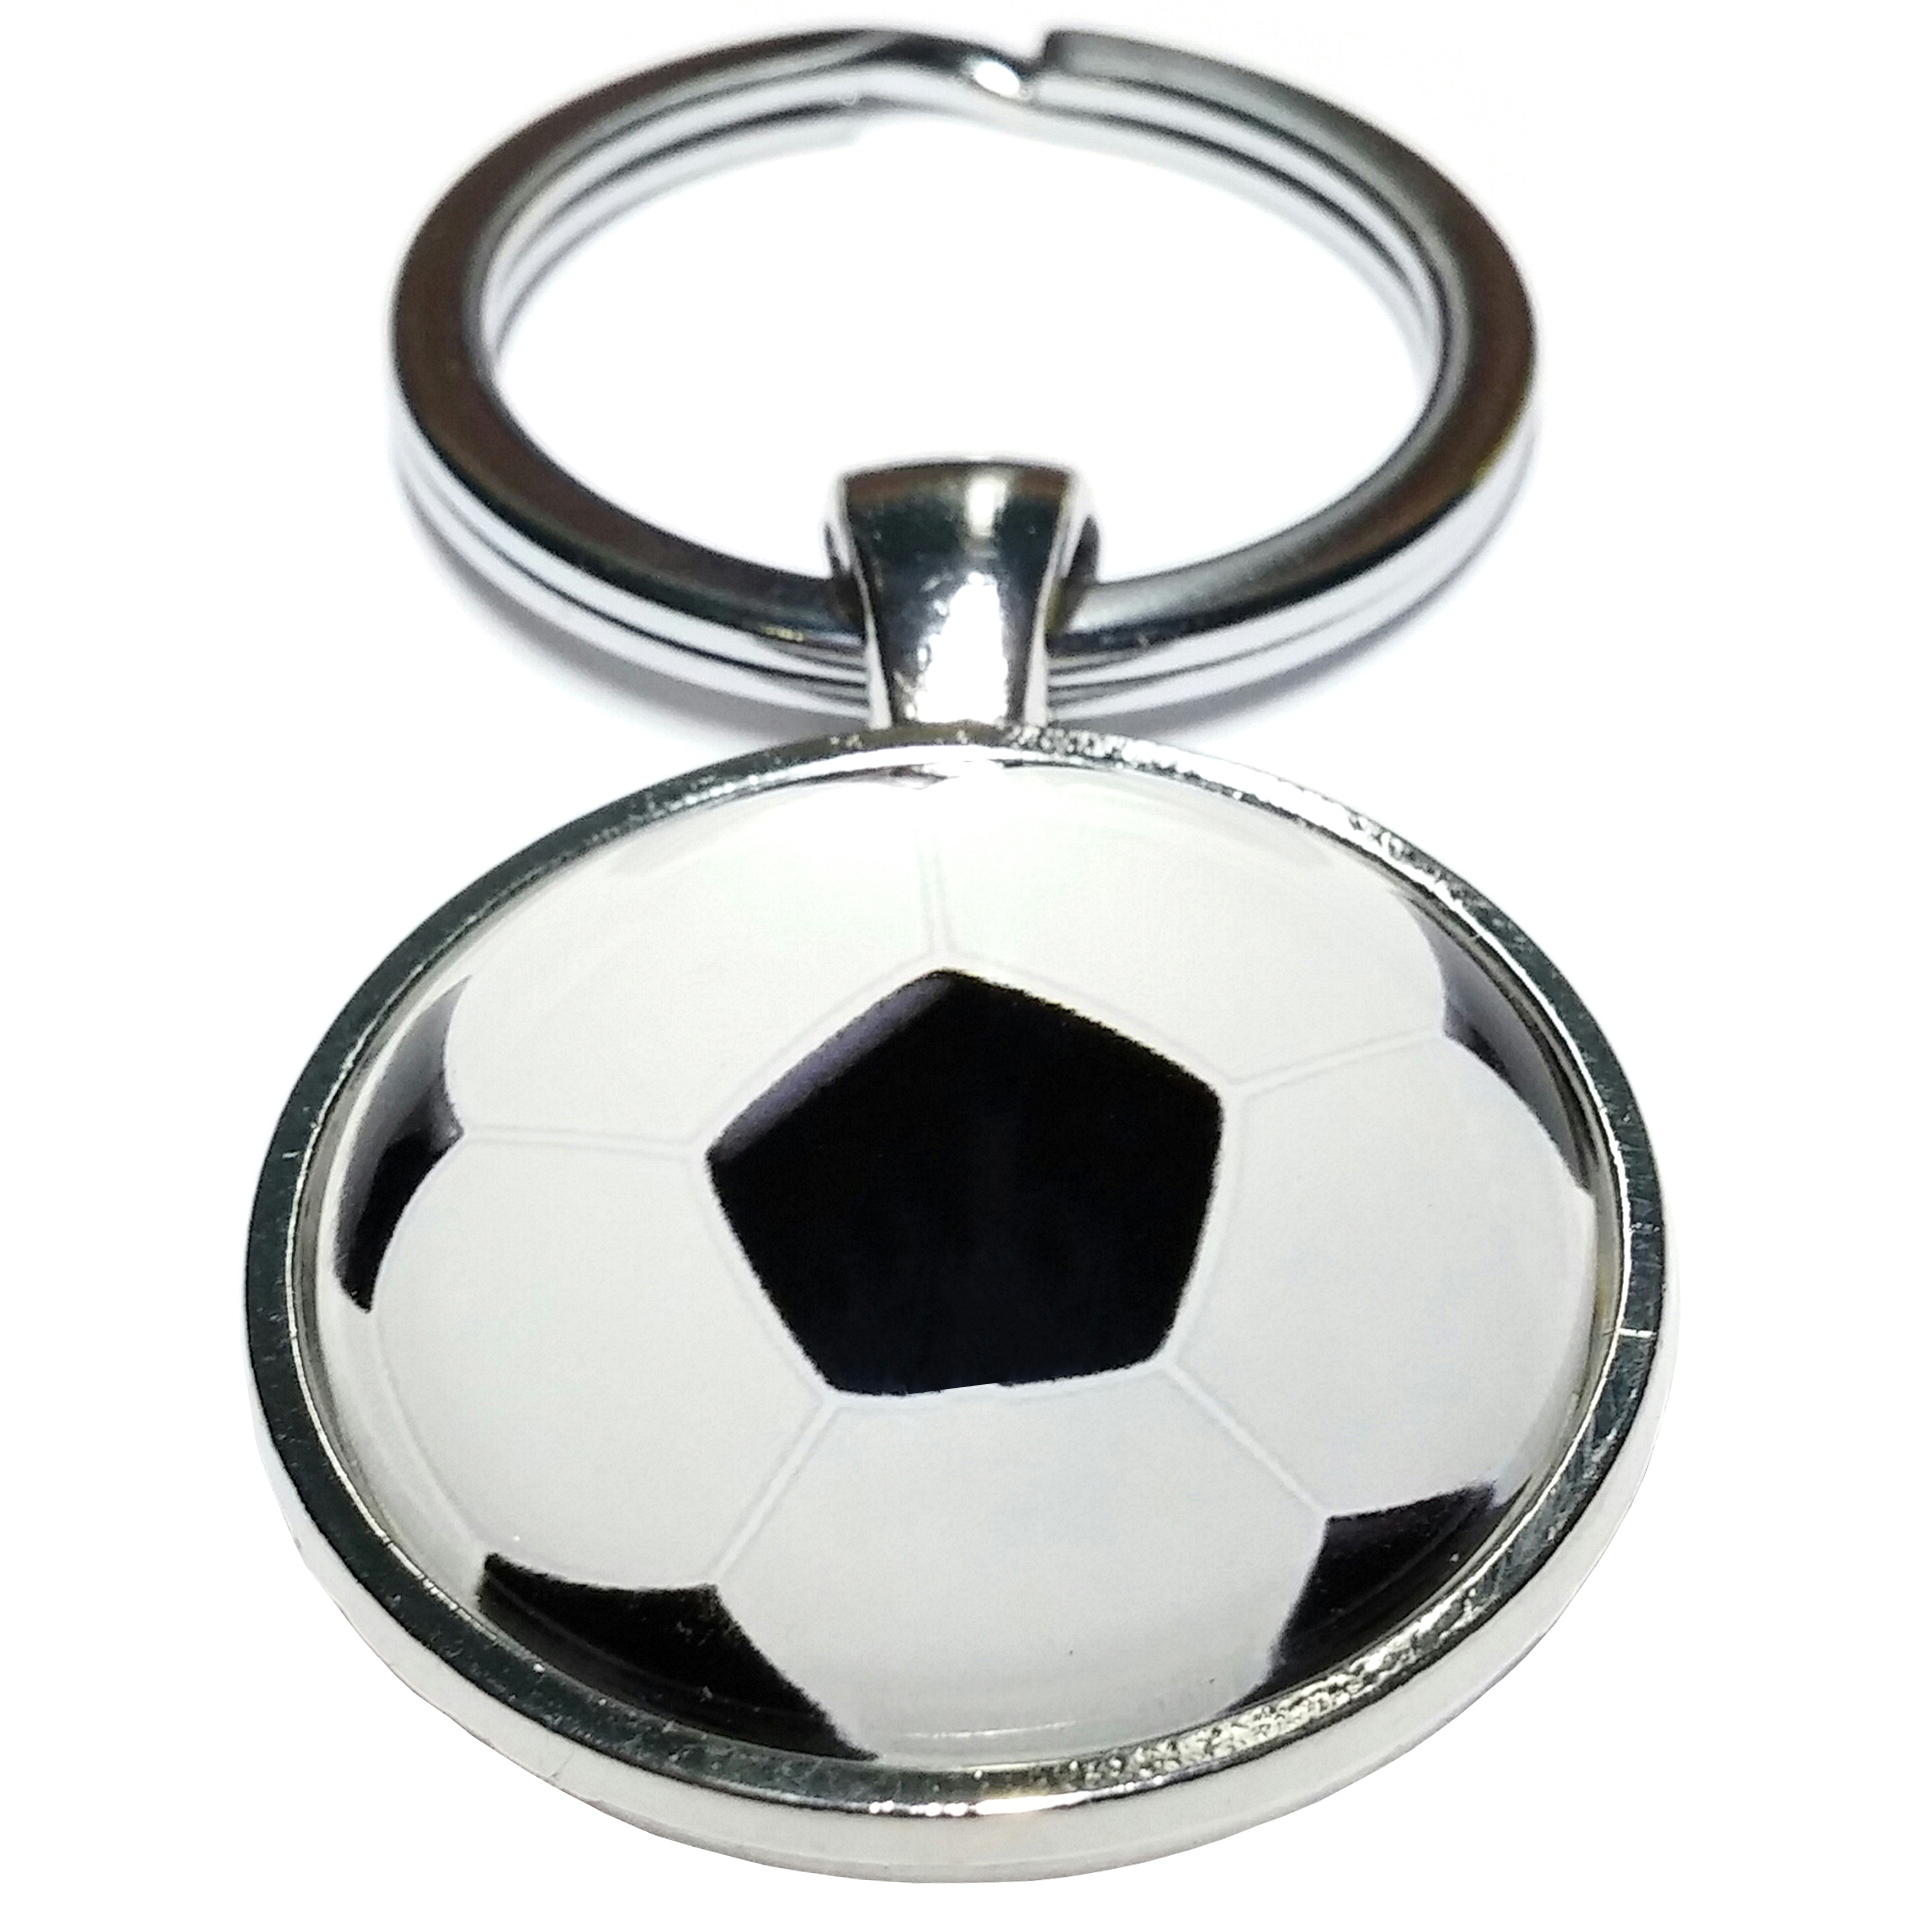 Porte clé métal football ballon de foot noir et blanc 2